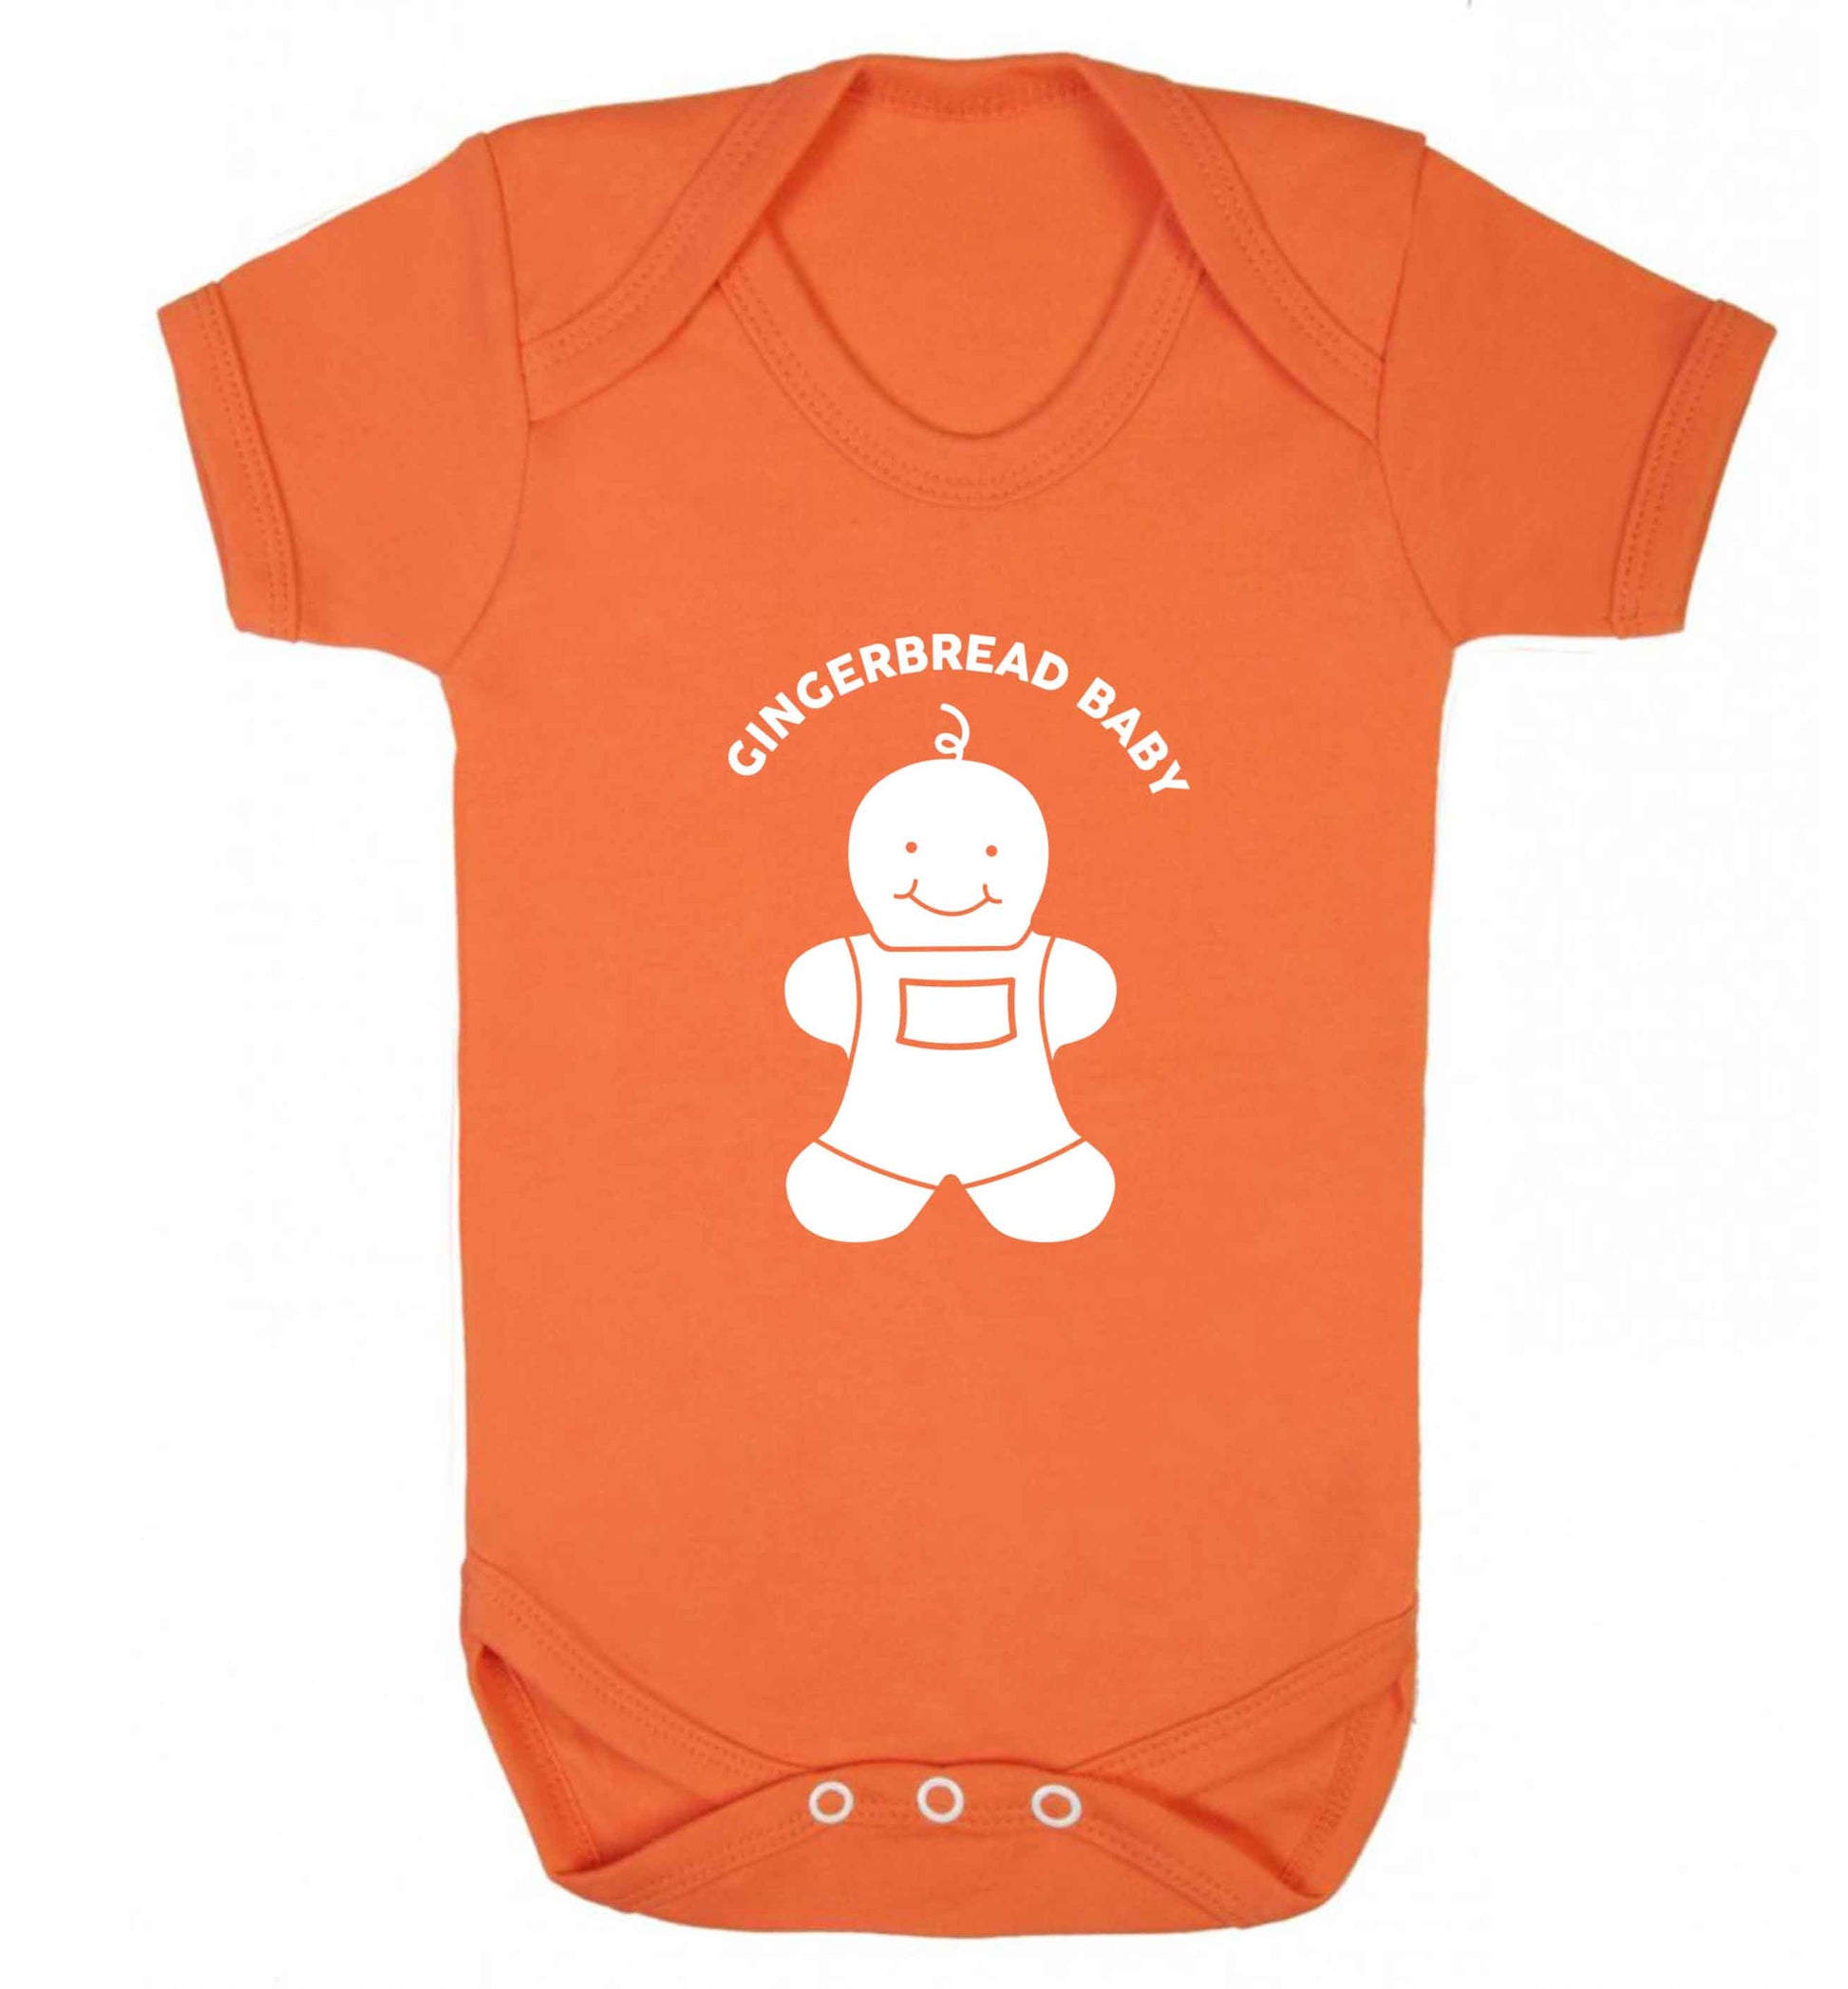 Gingerbread baby baby vest orange 18-24 months